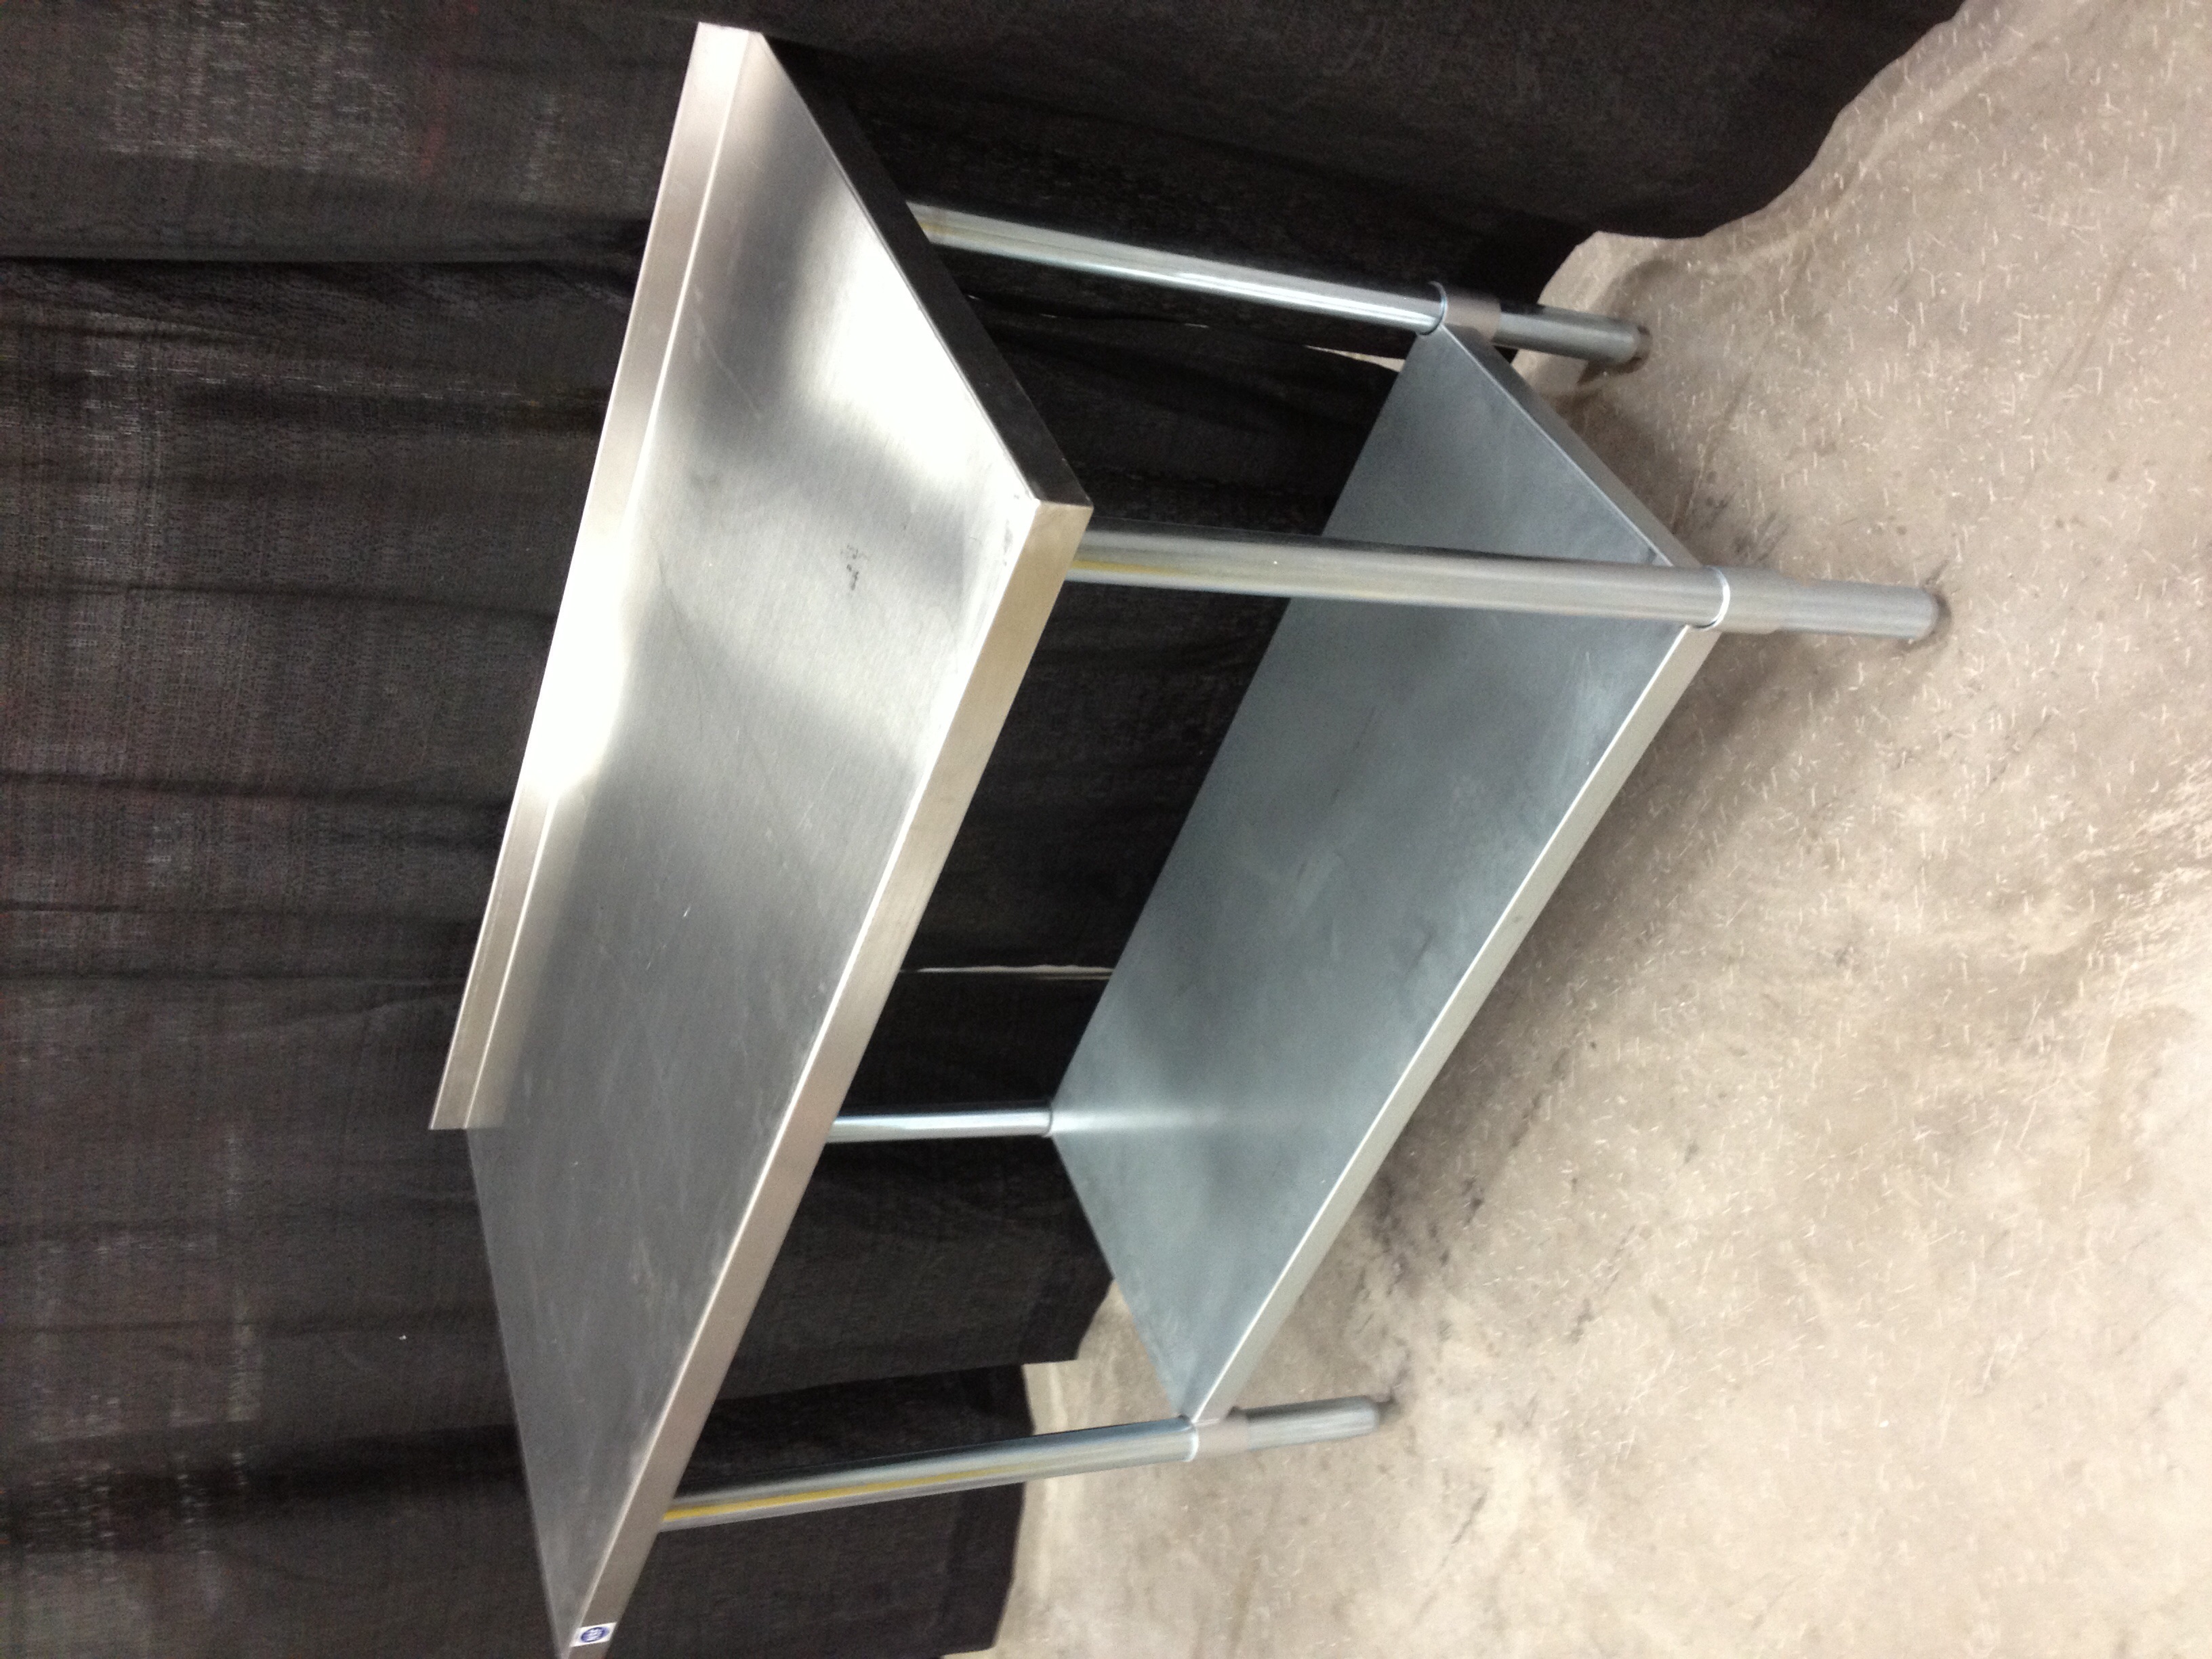 Db Restaurant Supply Stainless Steel Work Table With Undershelf 30x60